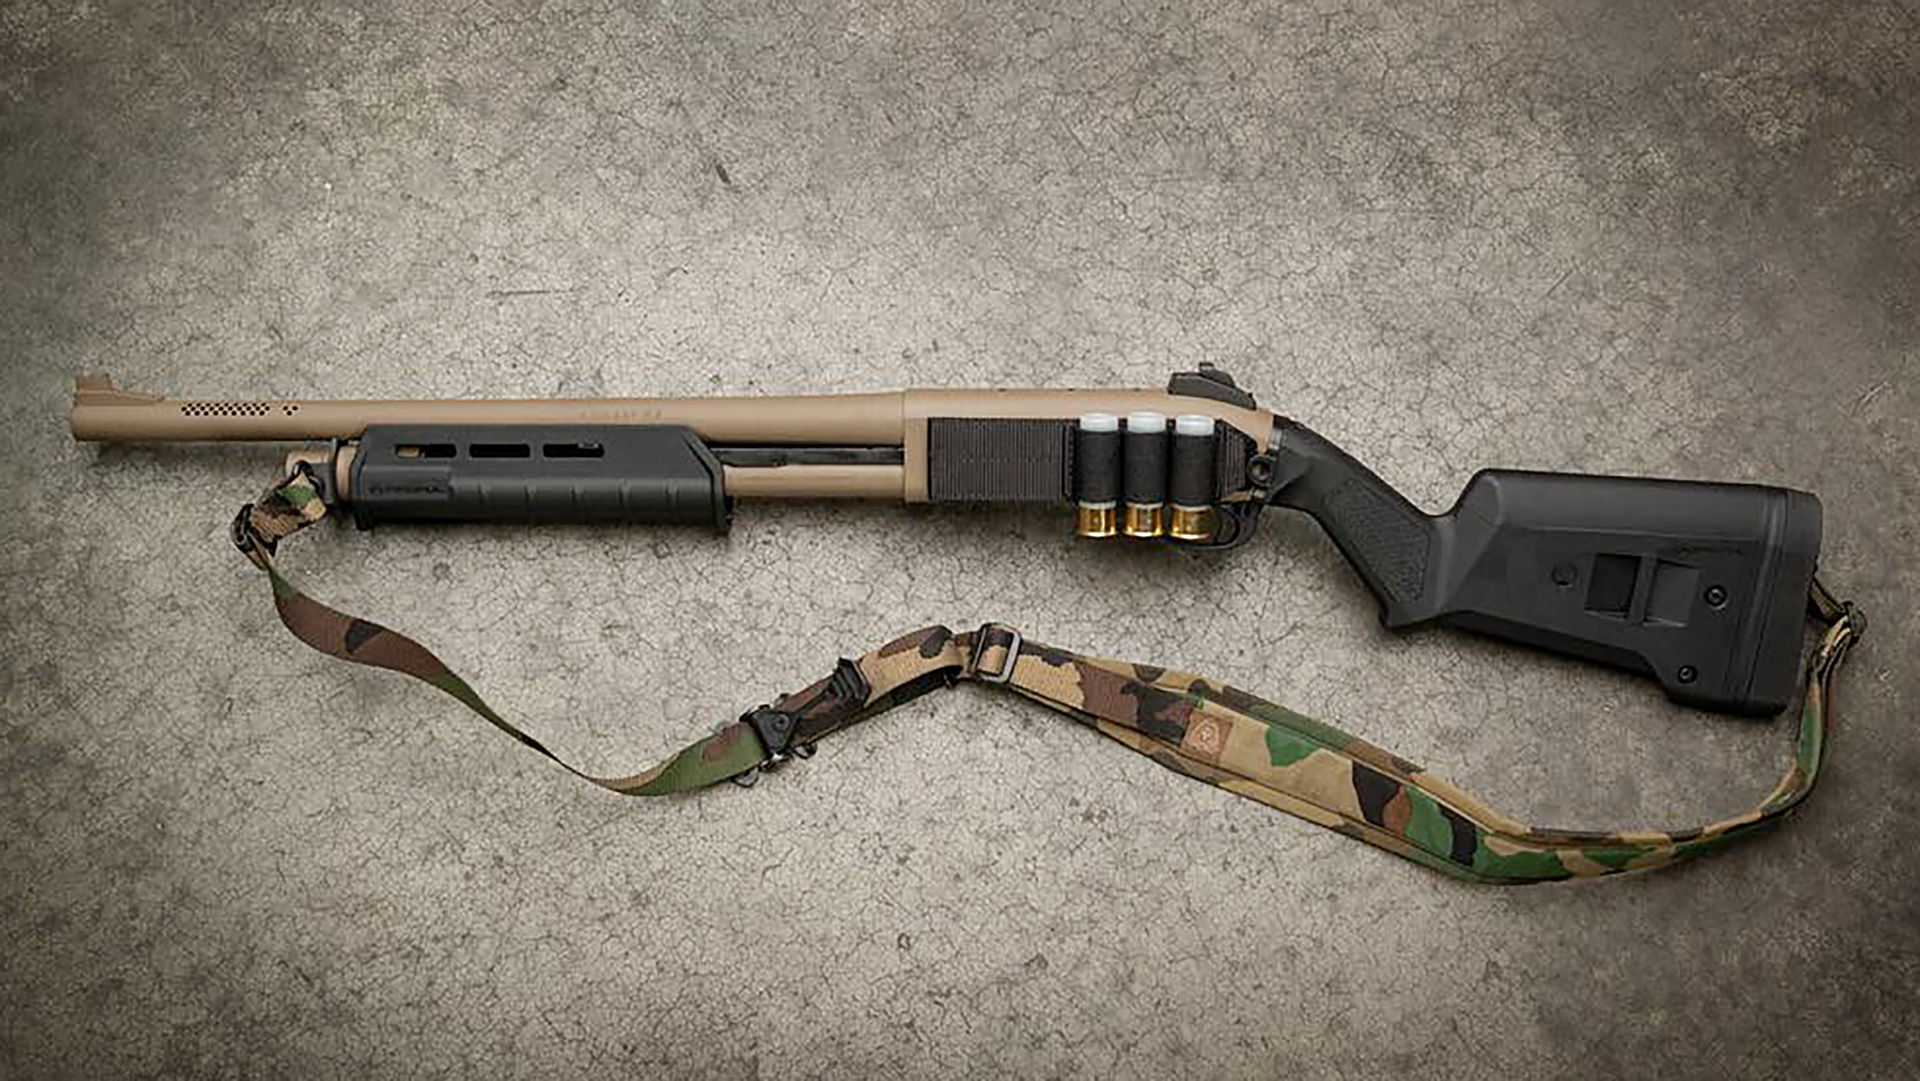 remington 870 combat shotgun